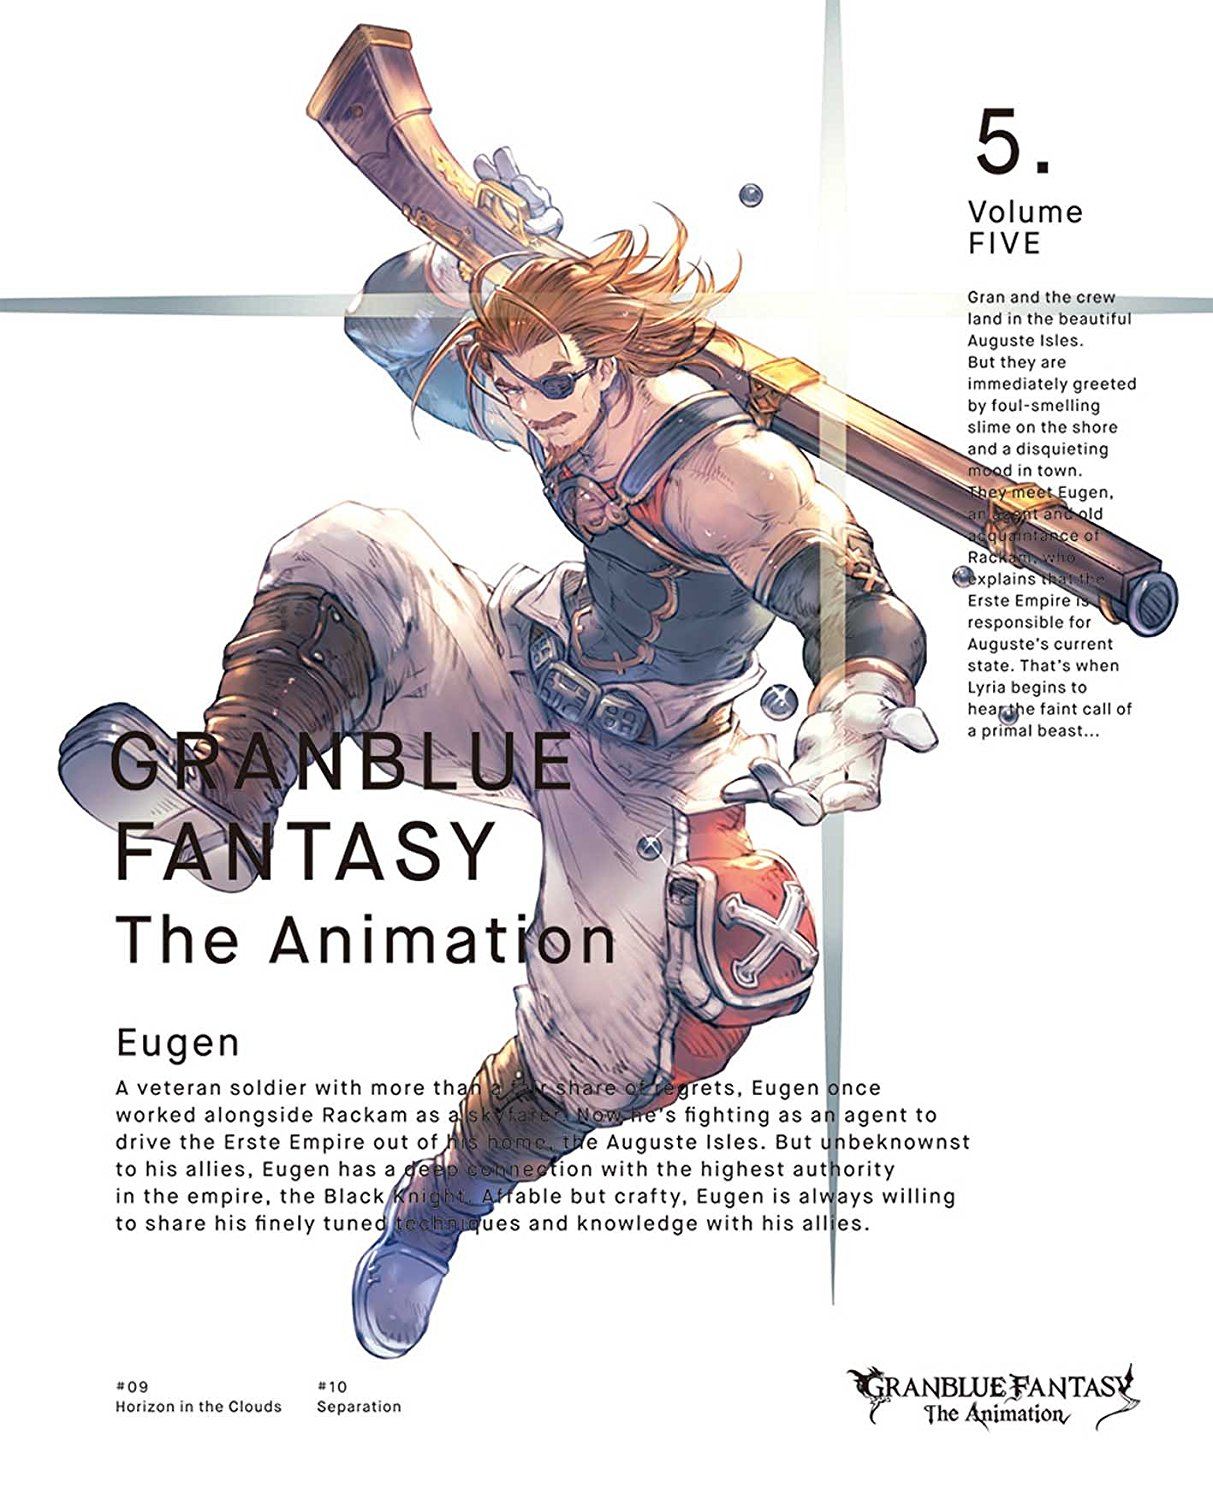 Granblue Fantasy The Animation Season 2 Vol.1 [Limited Edition]